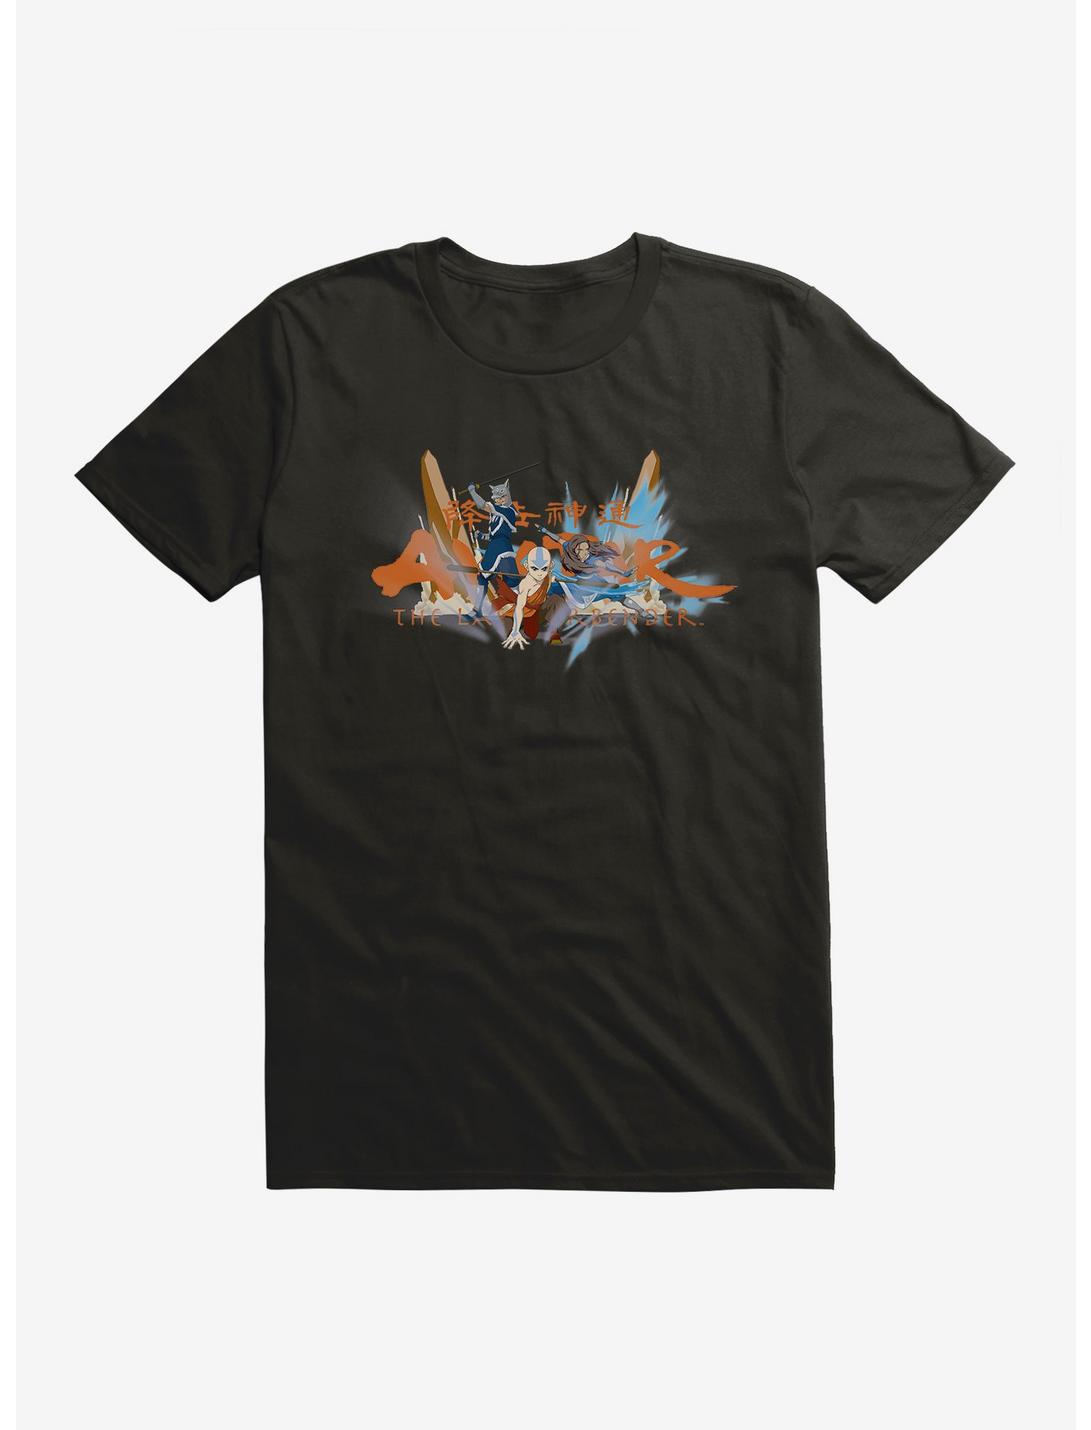 Avatar: The Last Airbender Trio T-Shirt, , hi-res